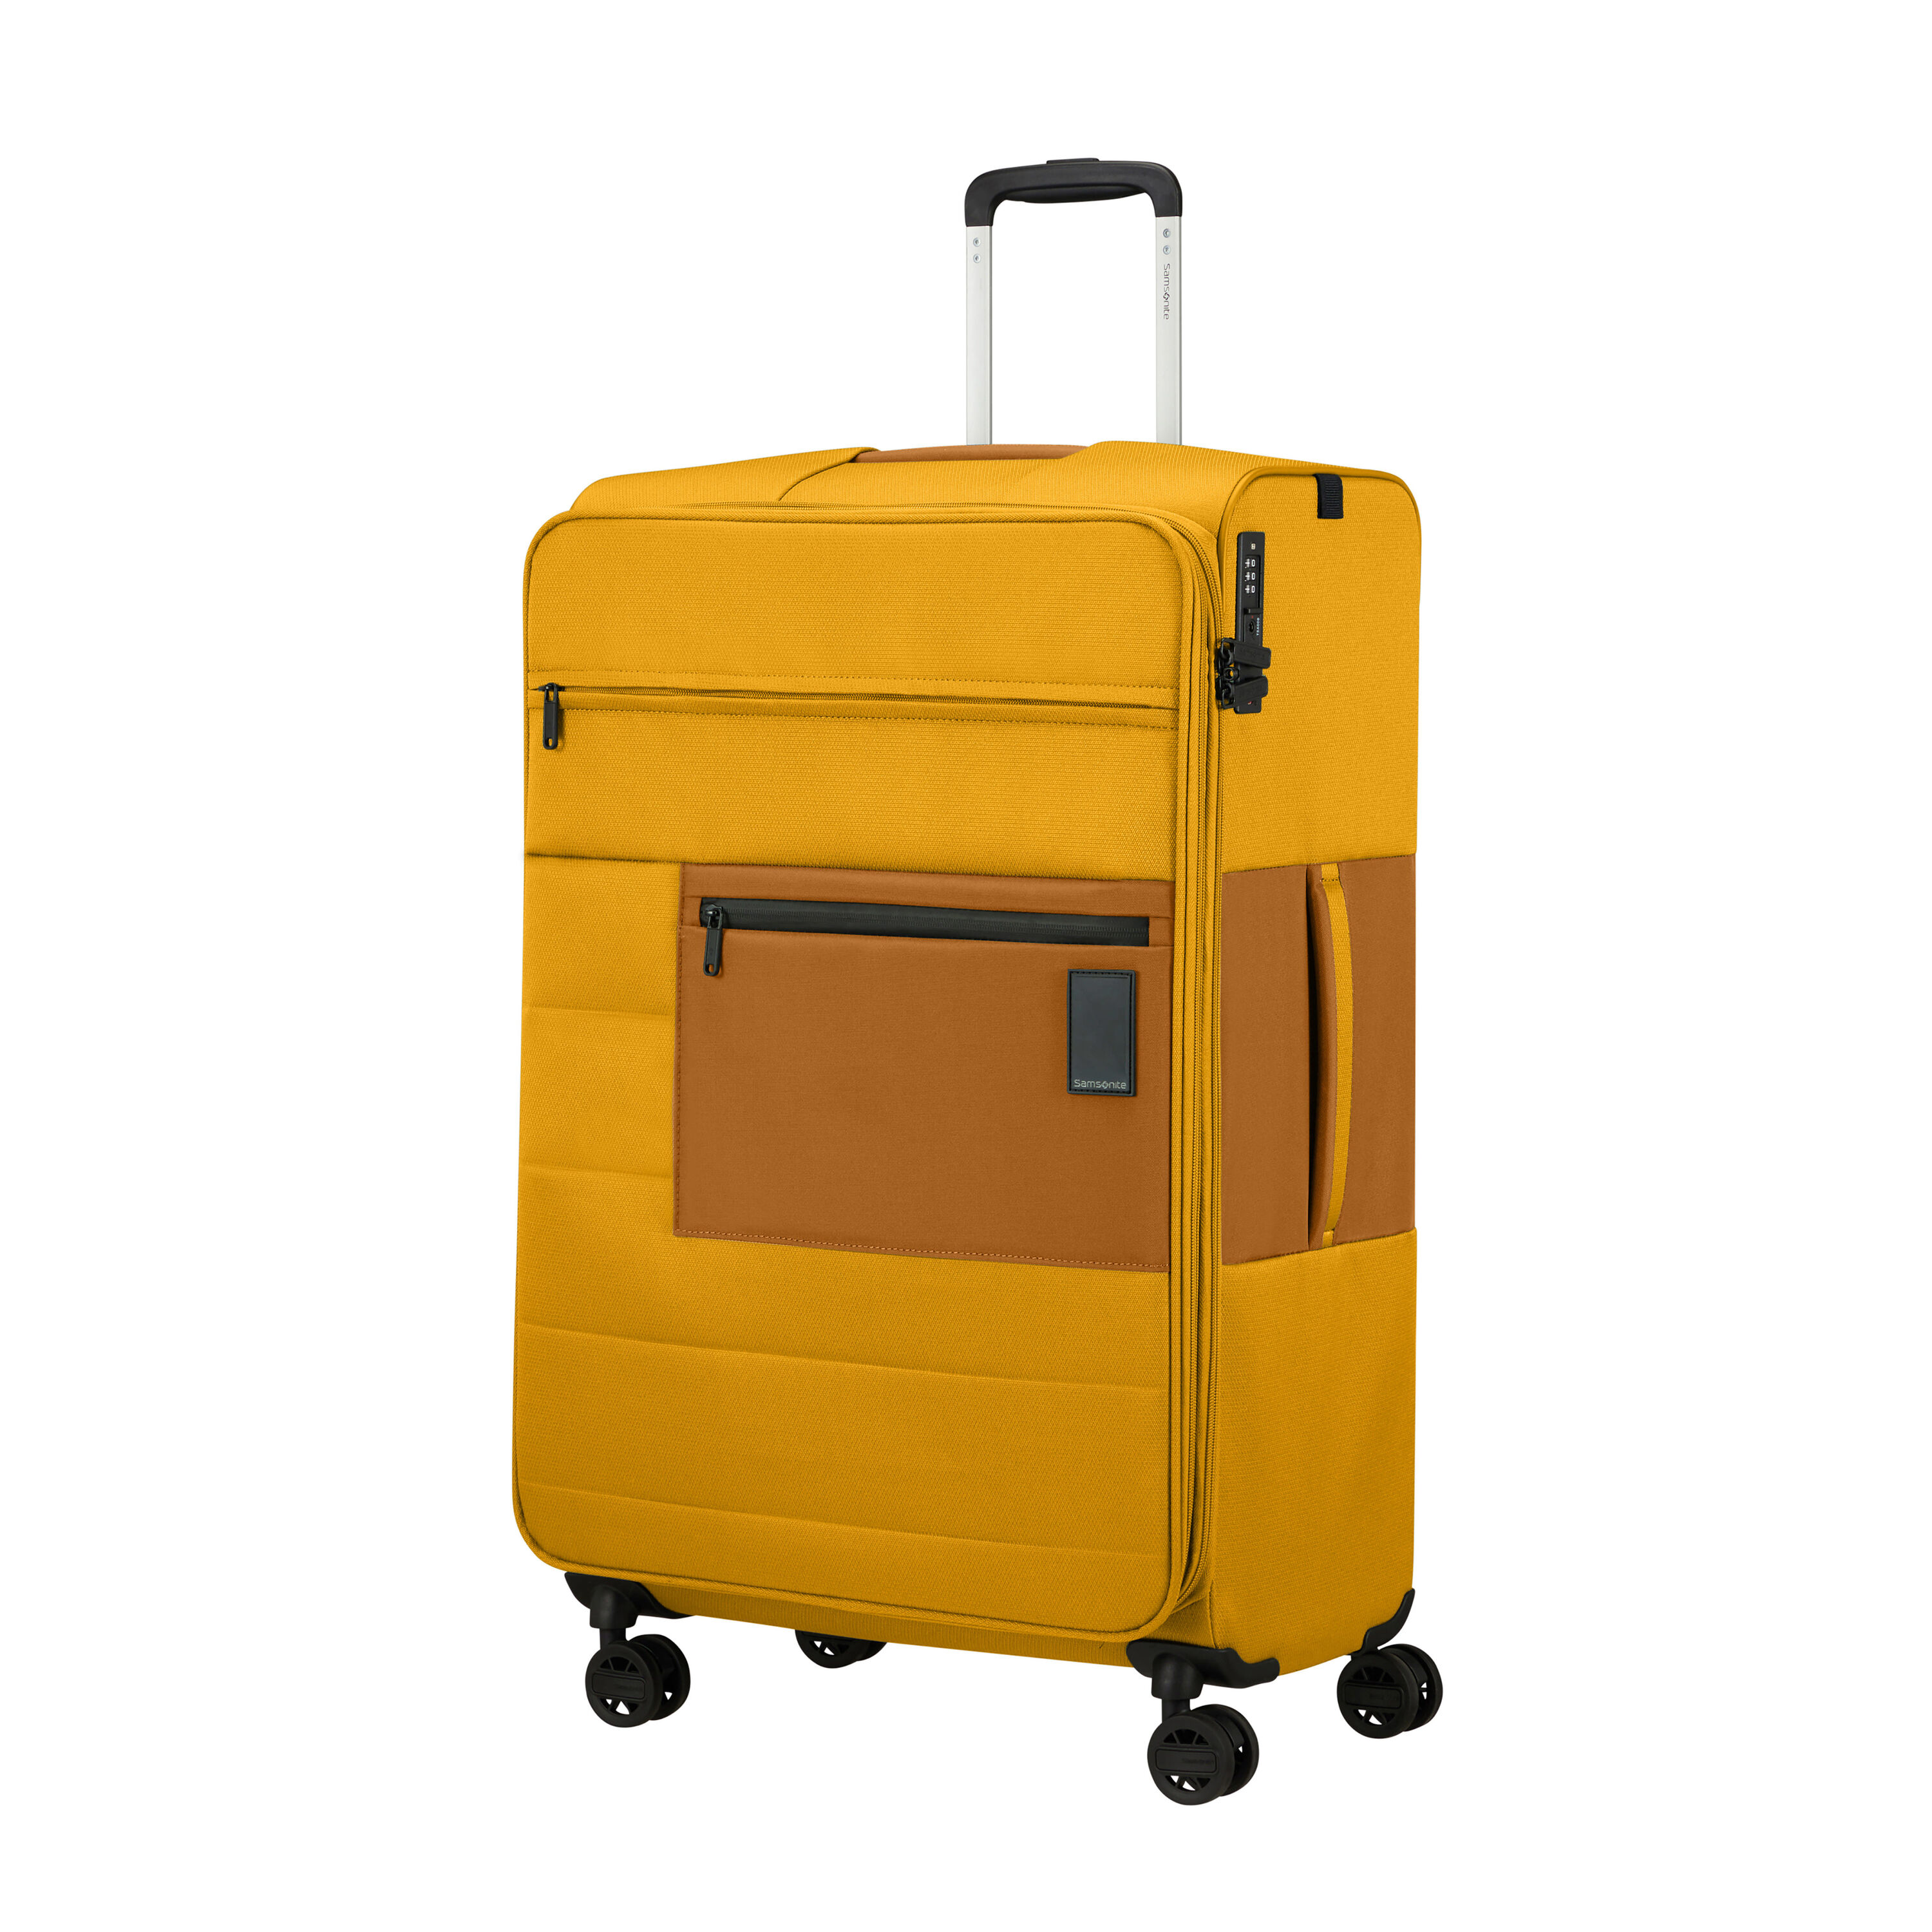 American Tourister Soundbox 4-Spinner Wheel 77cm Large Suitcase, Golden  Yellow